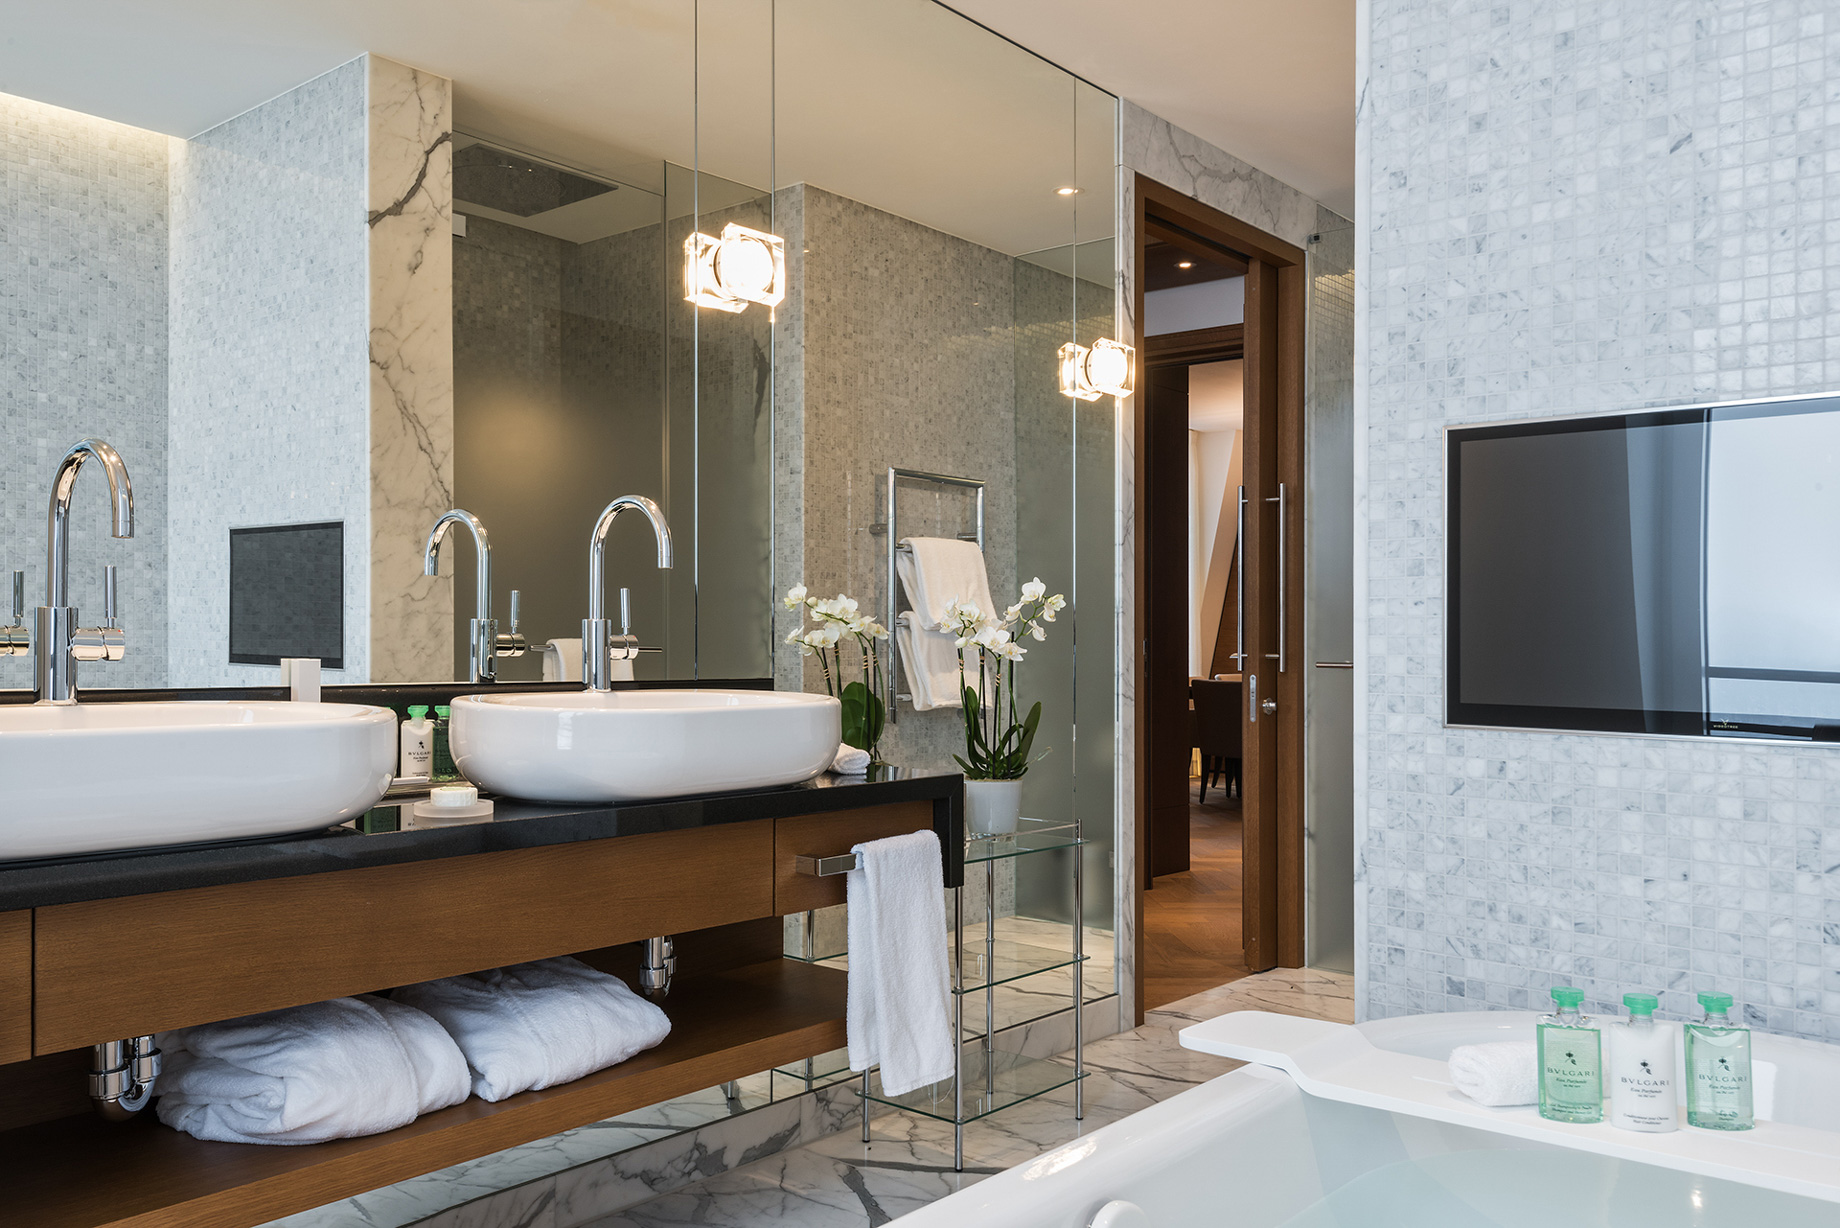 Palace Hotel - Burgenstock Hotels & Resort - Obburgen, Switzerland - Palace Grand Suite Bathroom